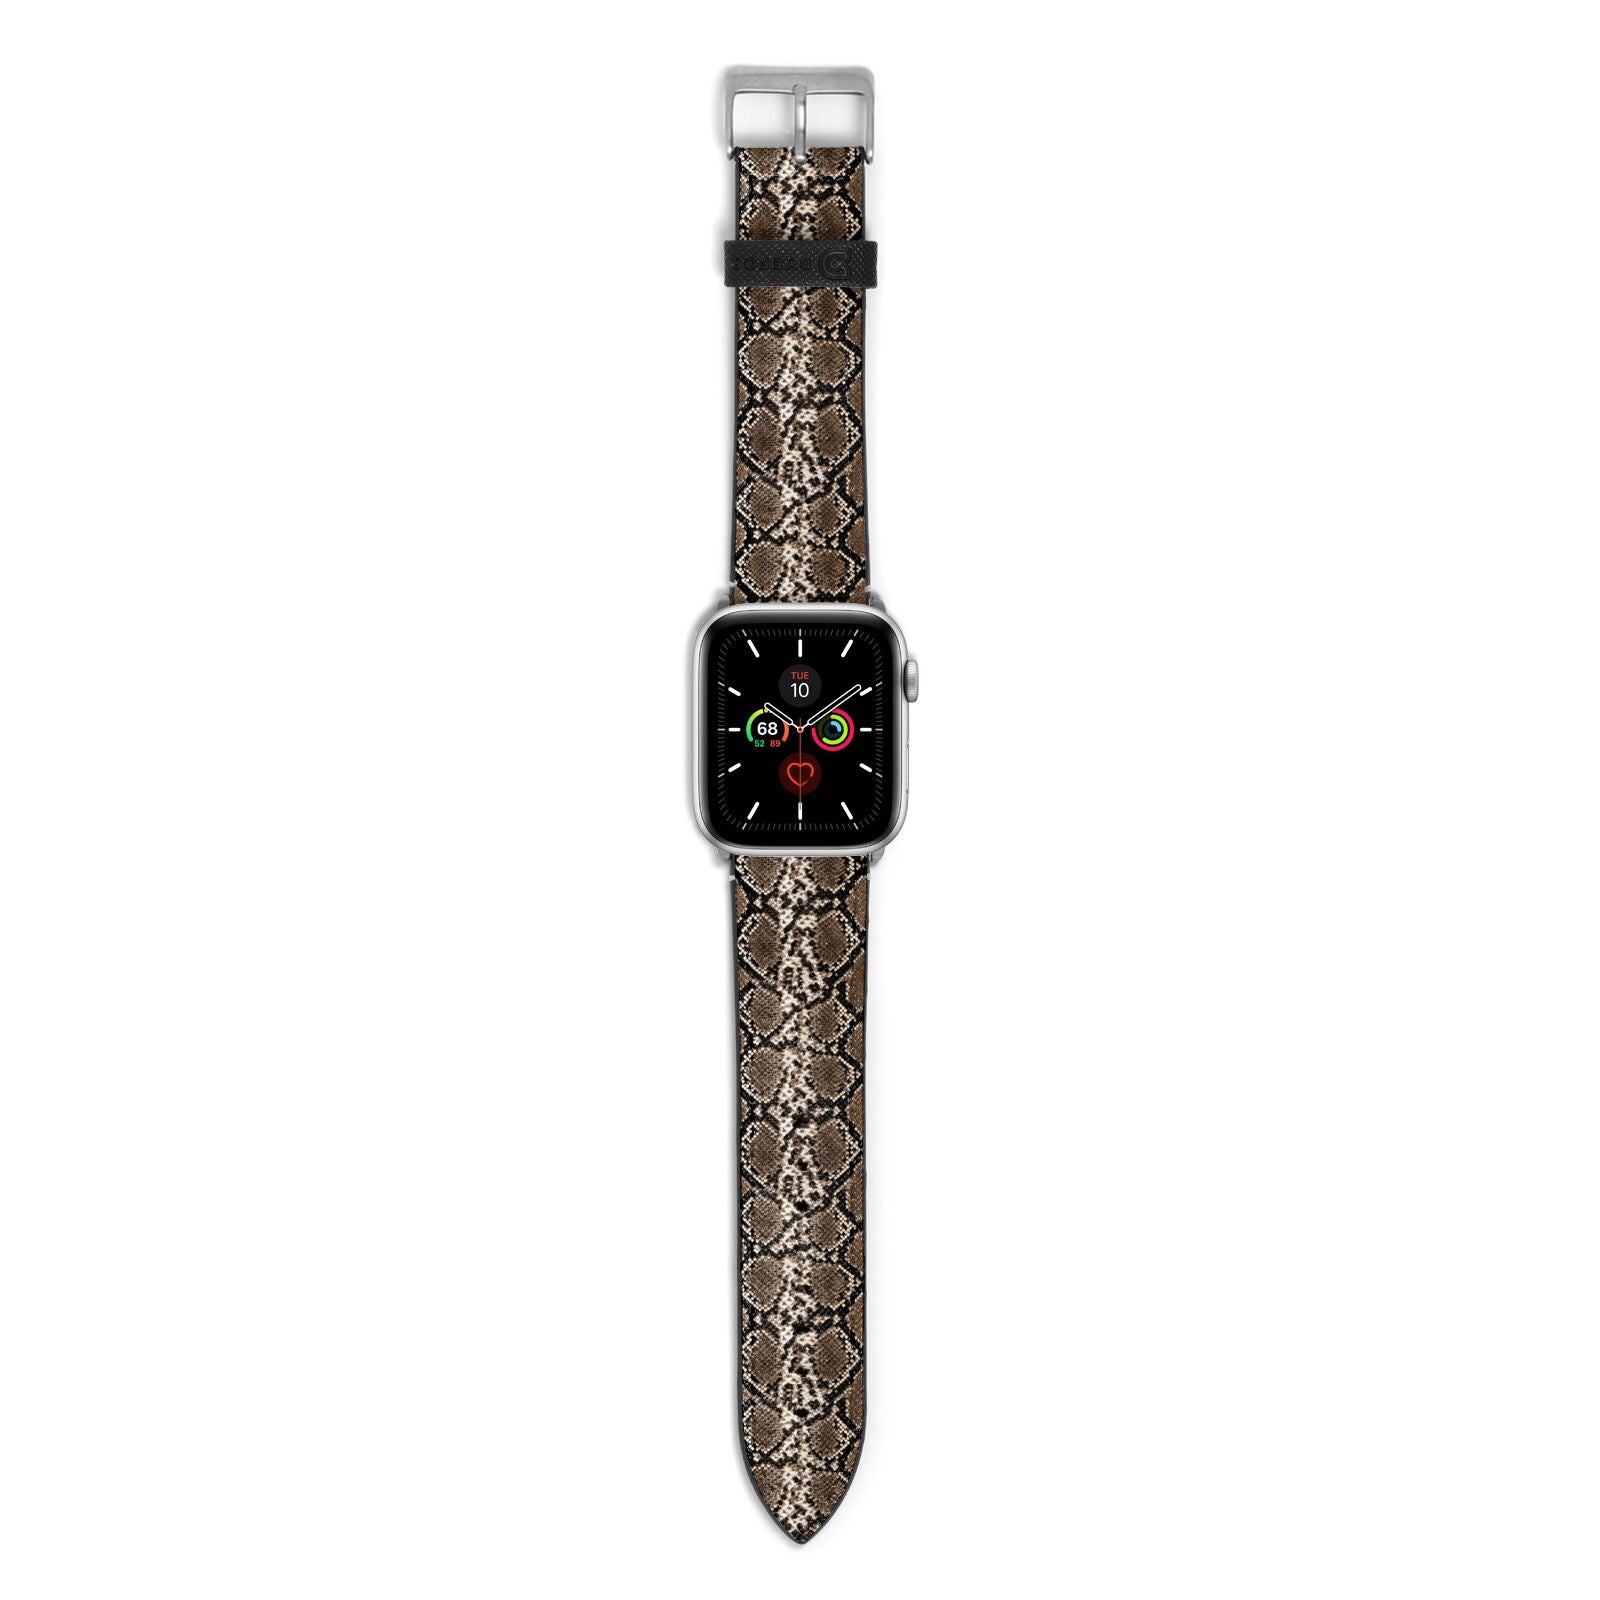 Snakeskin Pattern Apple Watch Strap with Silver Hardware